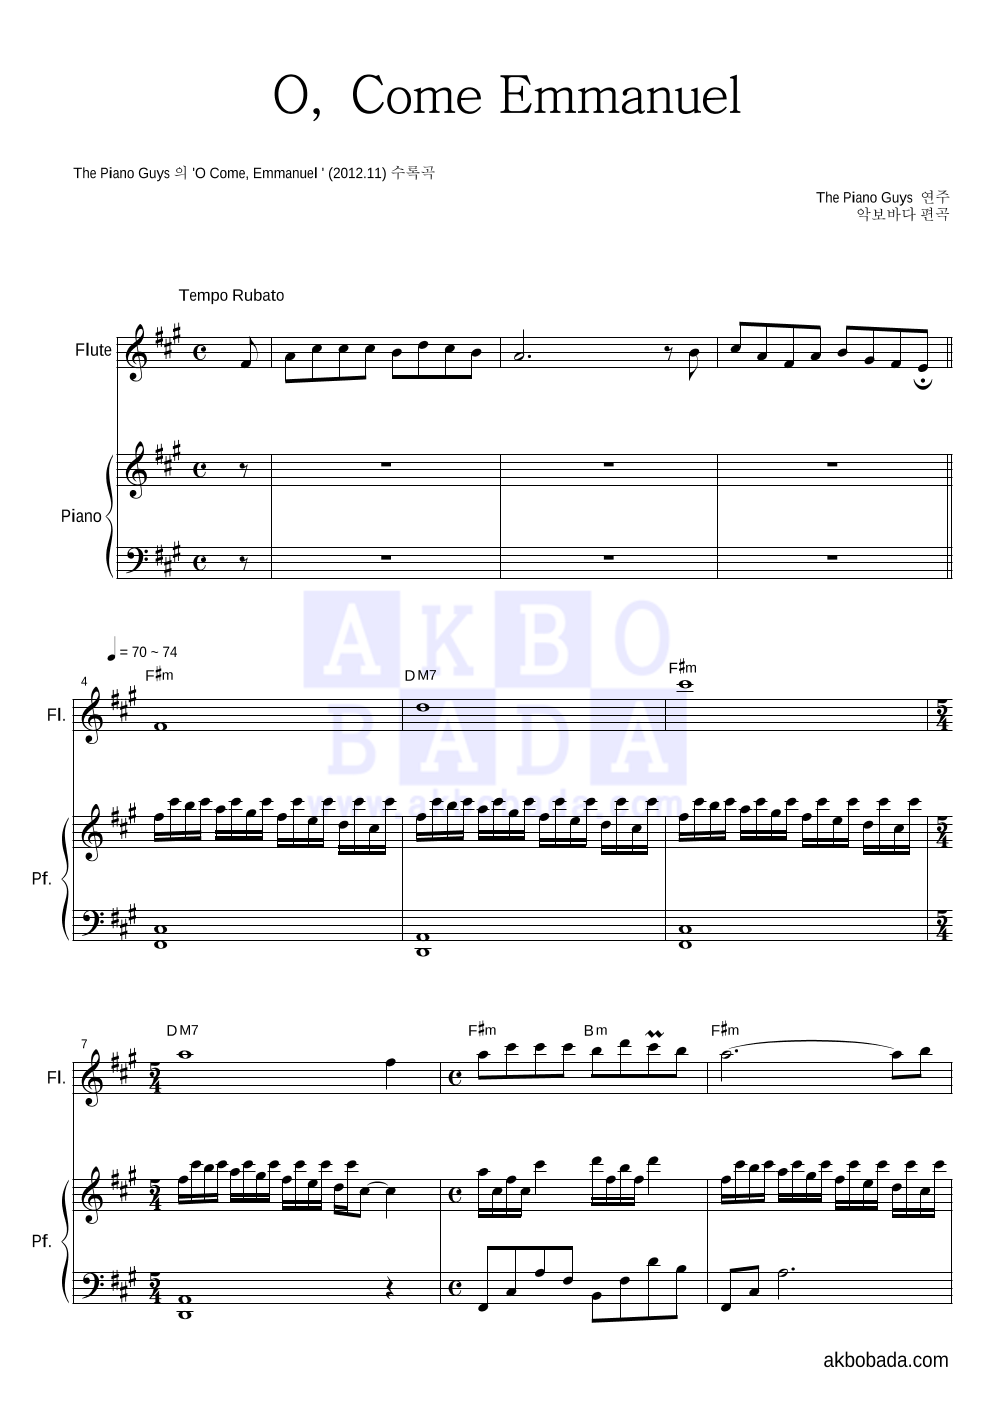 The Piano Guys - O Come, Emmanuel 플룻&피아노 악보 